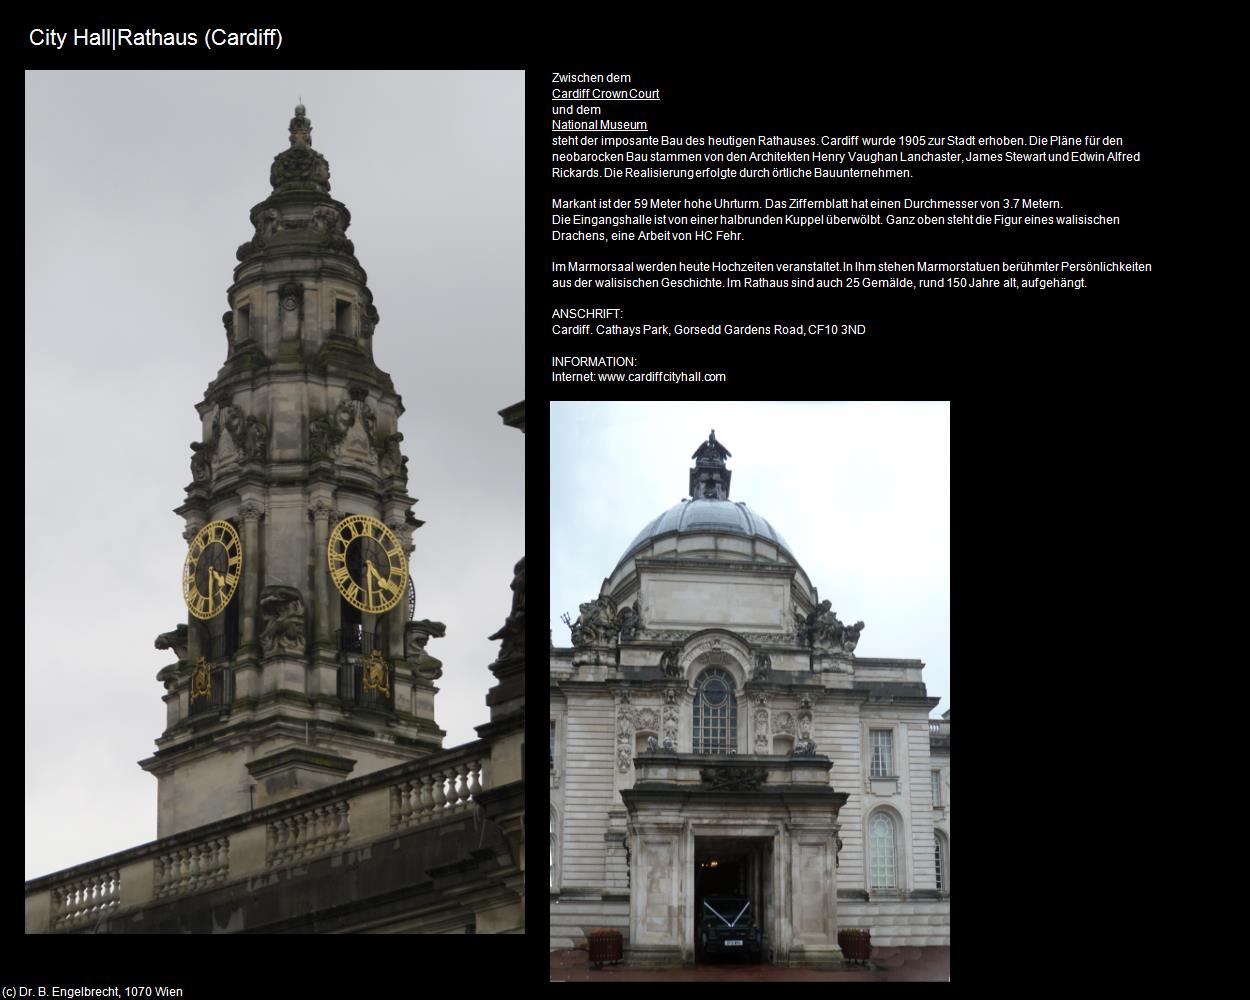 City Hall|Rathaus  (Cardiff, Wales) in Kulturatlas-ENGLAND und WALES(c)B.Engelbrecht